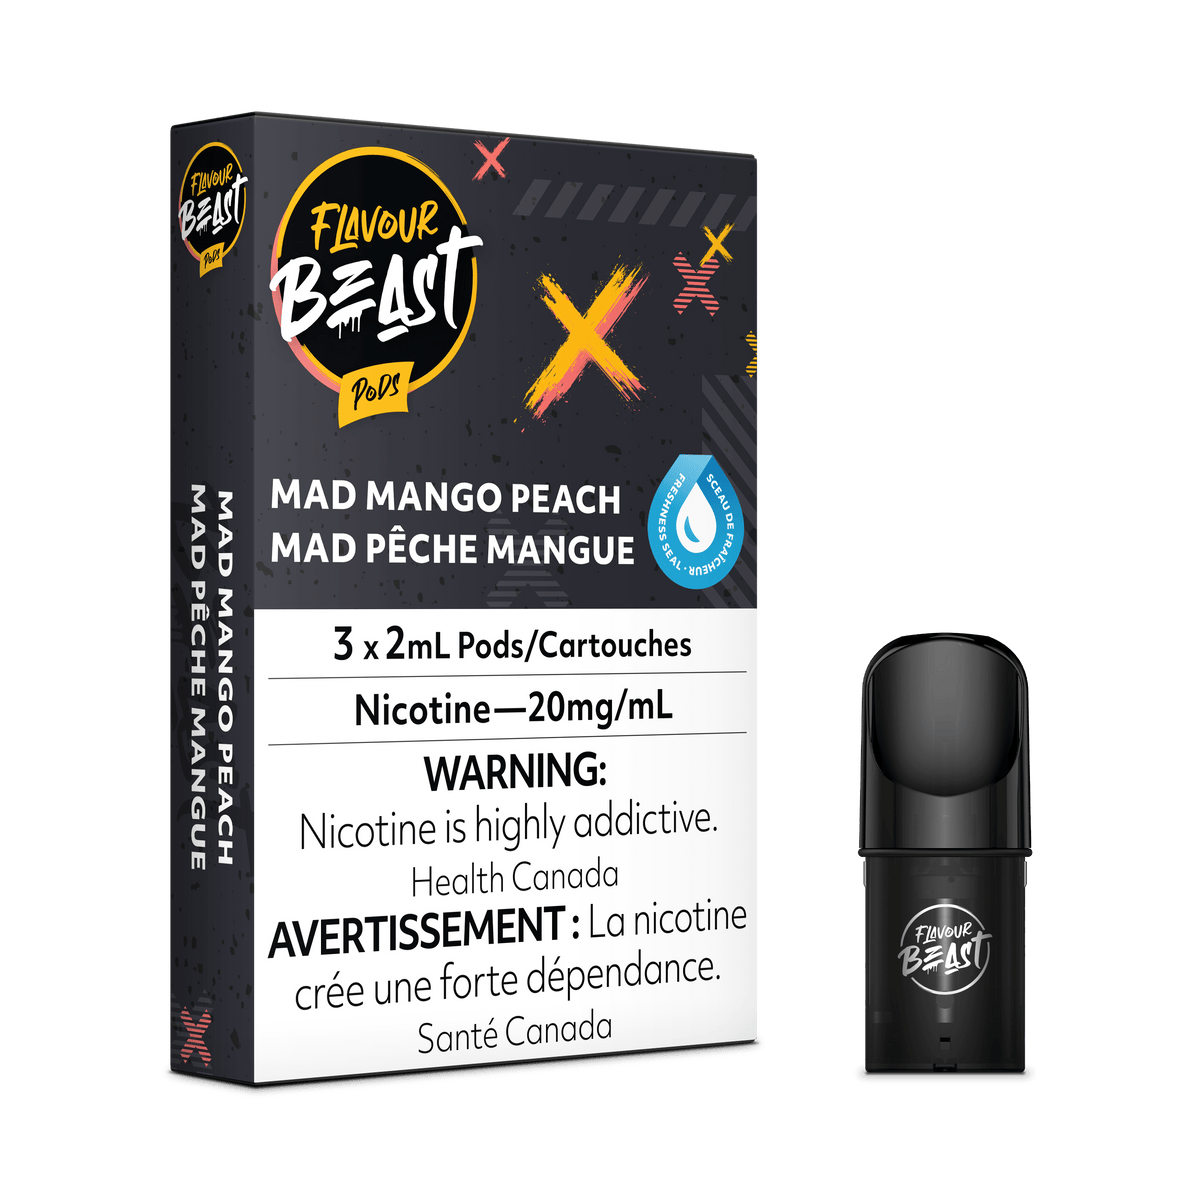 Flavour Beast Vape Pod - Mad Mango Peach available on Canada online vape shop